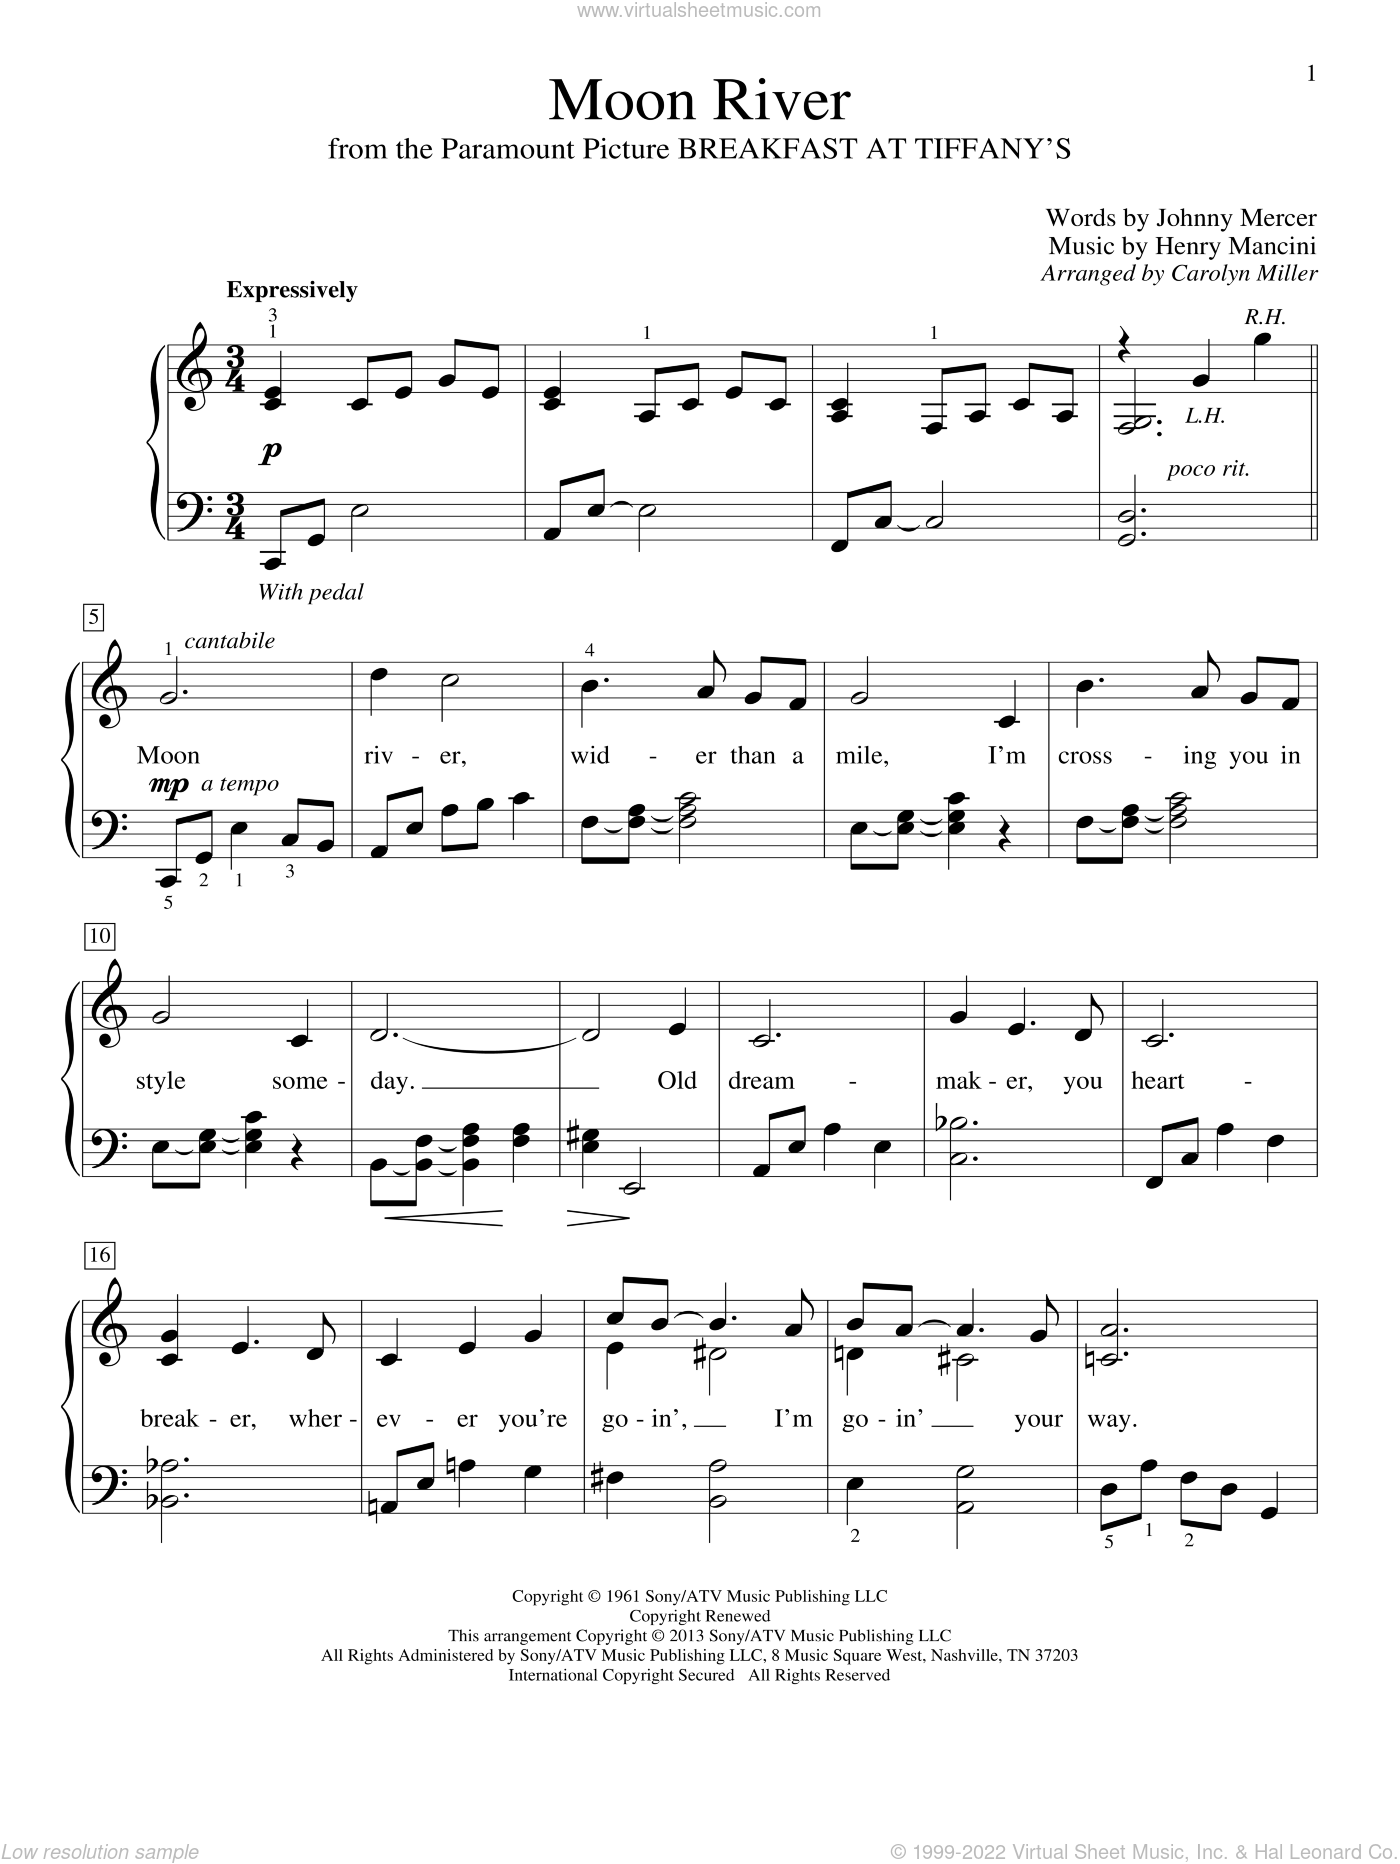 Mancini - Moon River sheet music (beginner) for piano solo ...